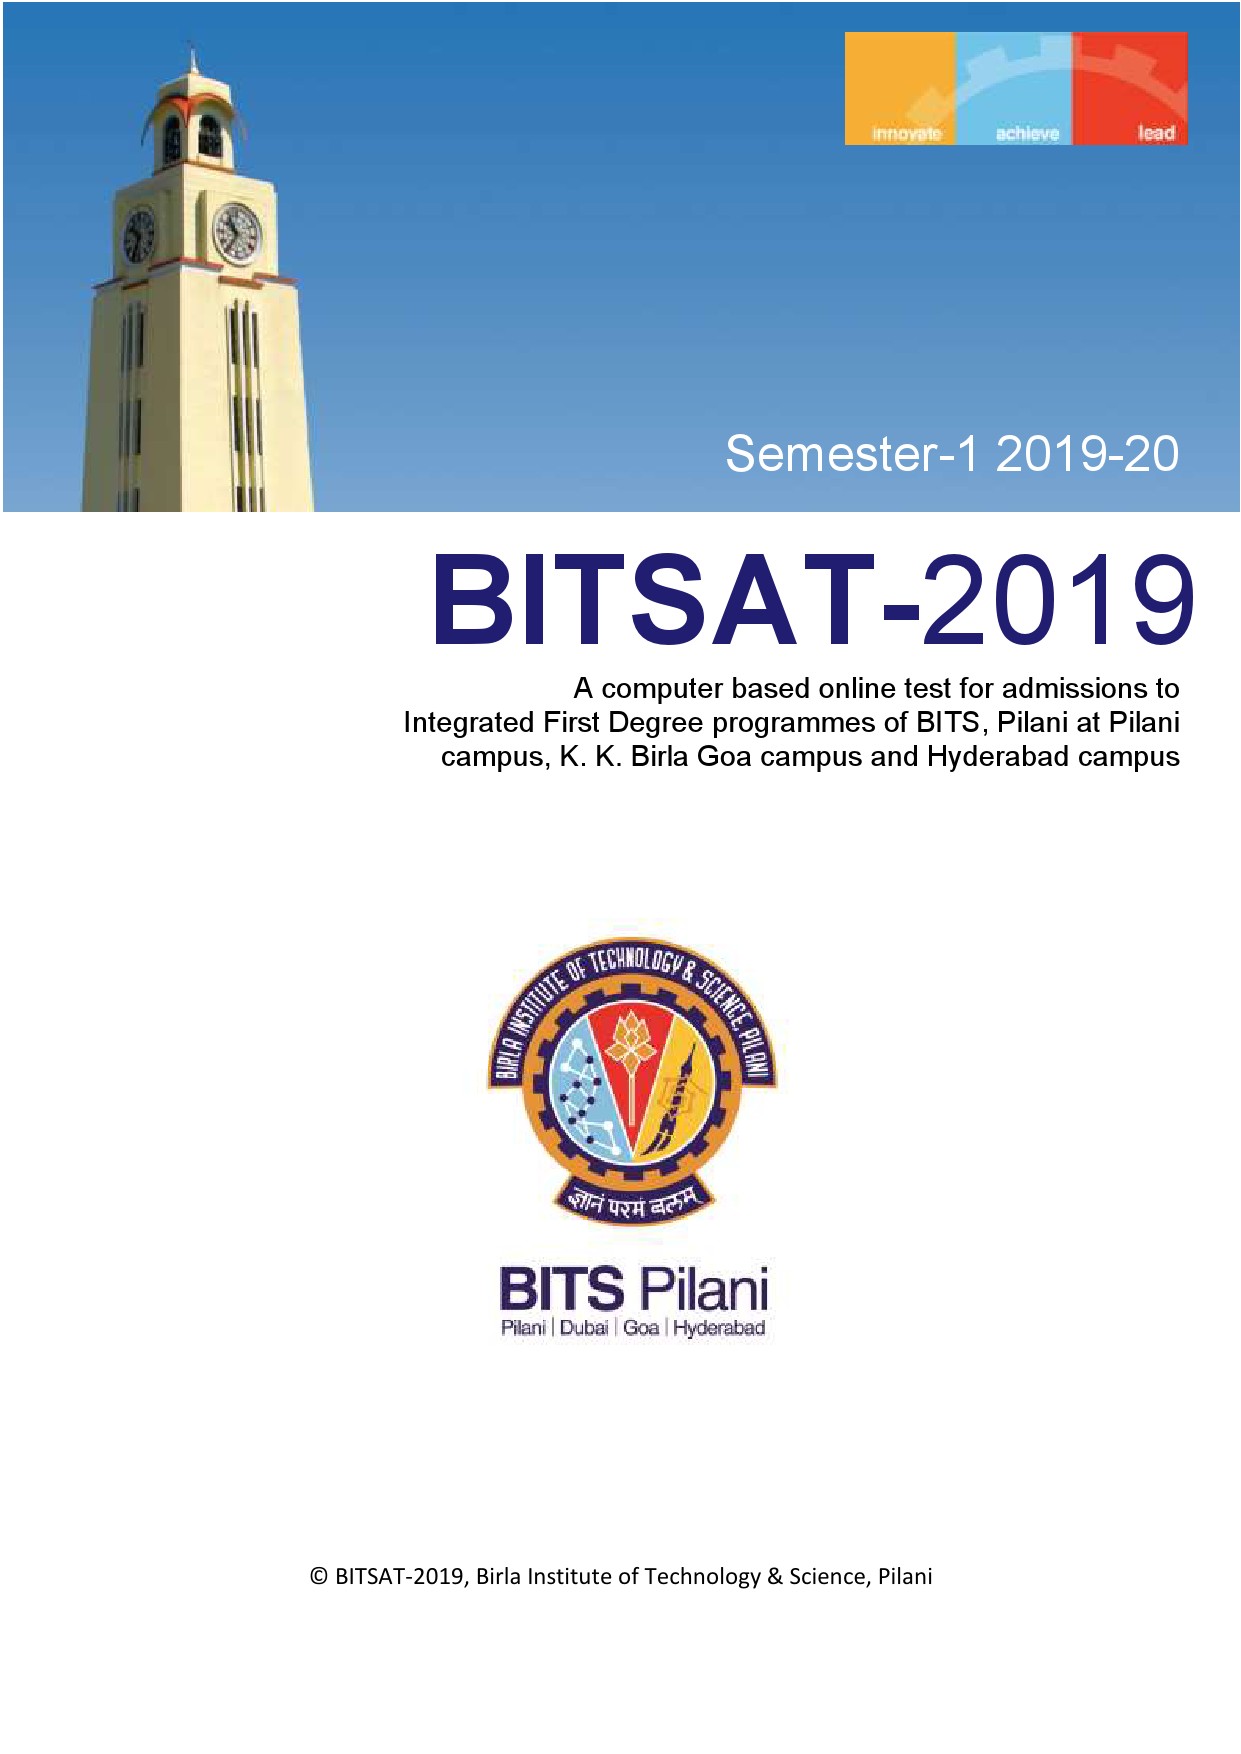 BITSAT 2019 Online Test Brochure - Notification Image 1